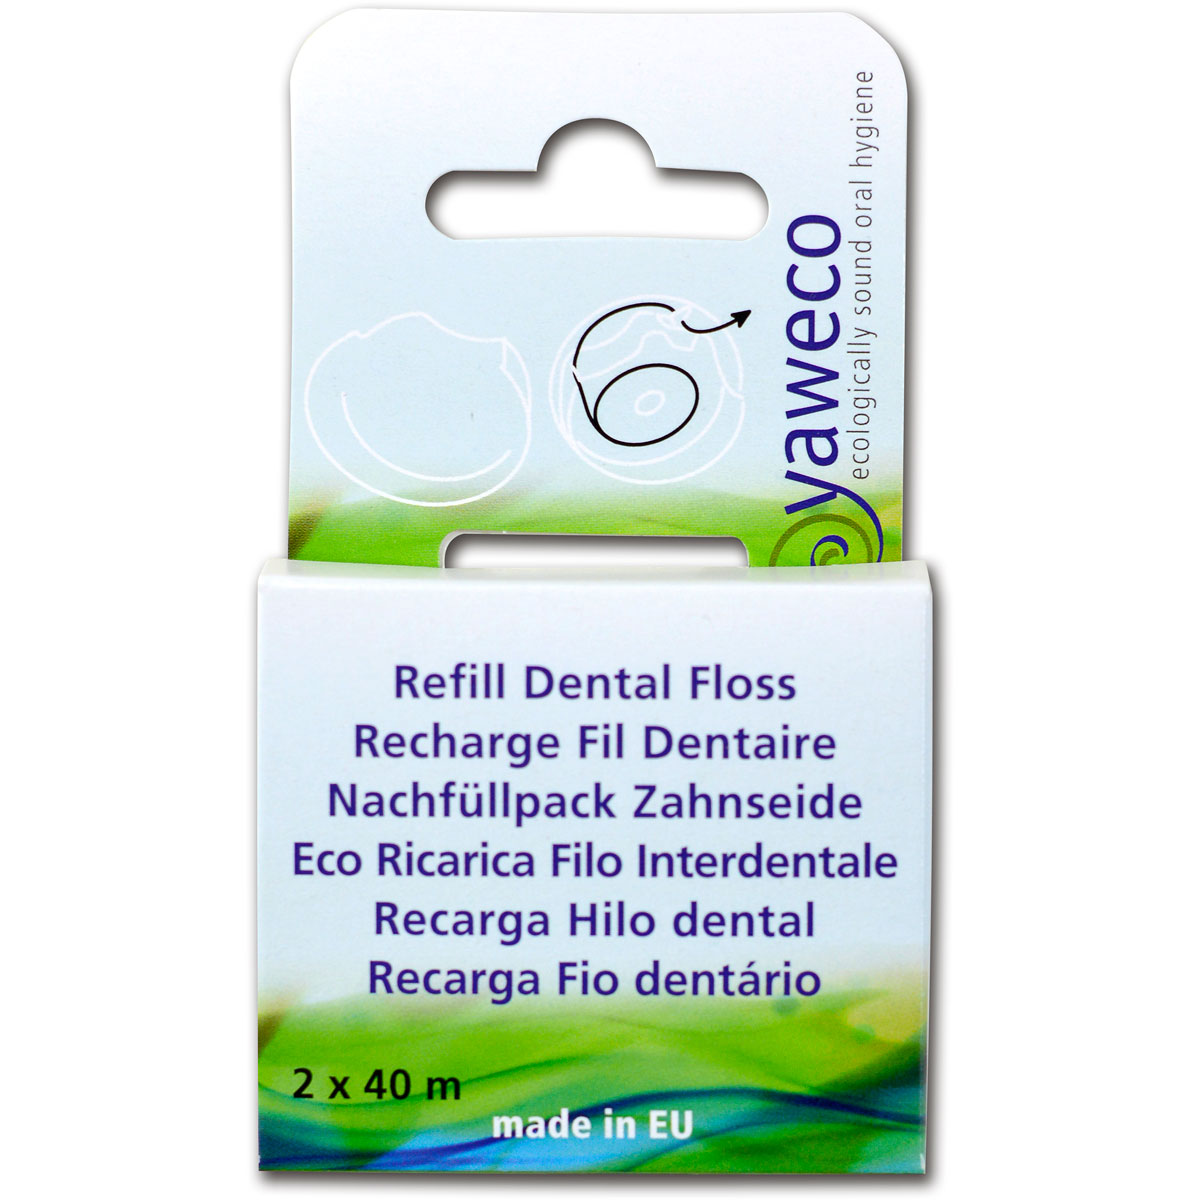 Yaweco Dental Floss Refill - 2 x 40m per pack